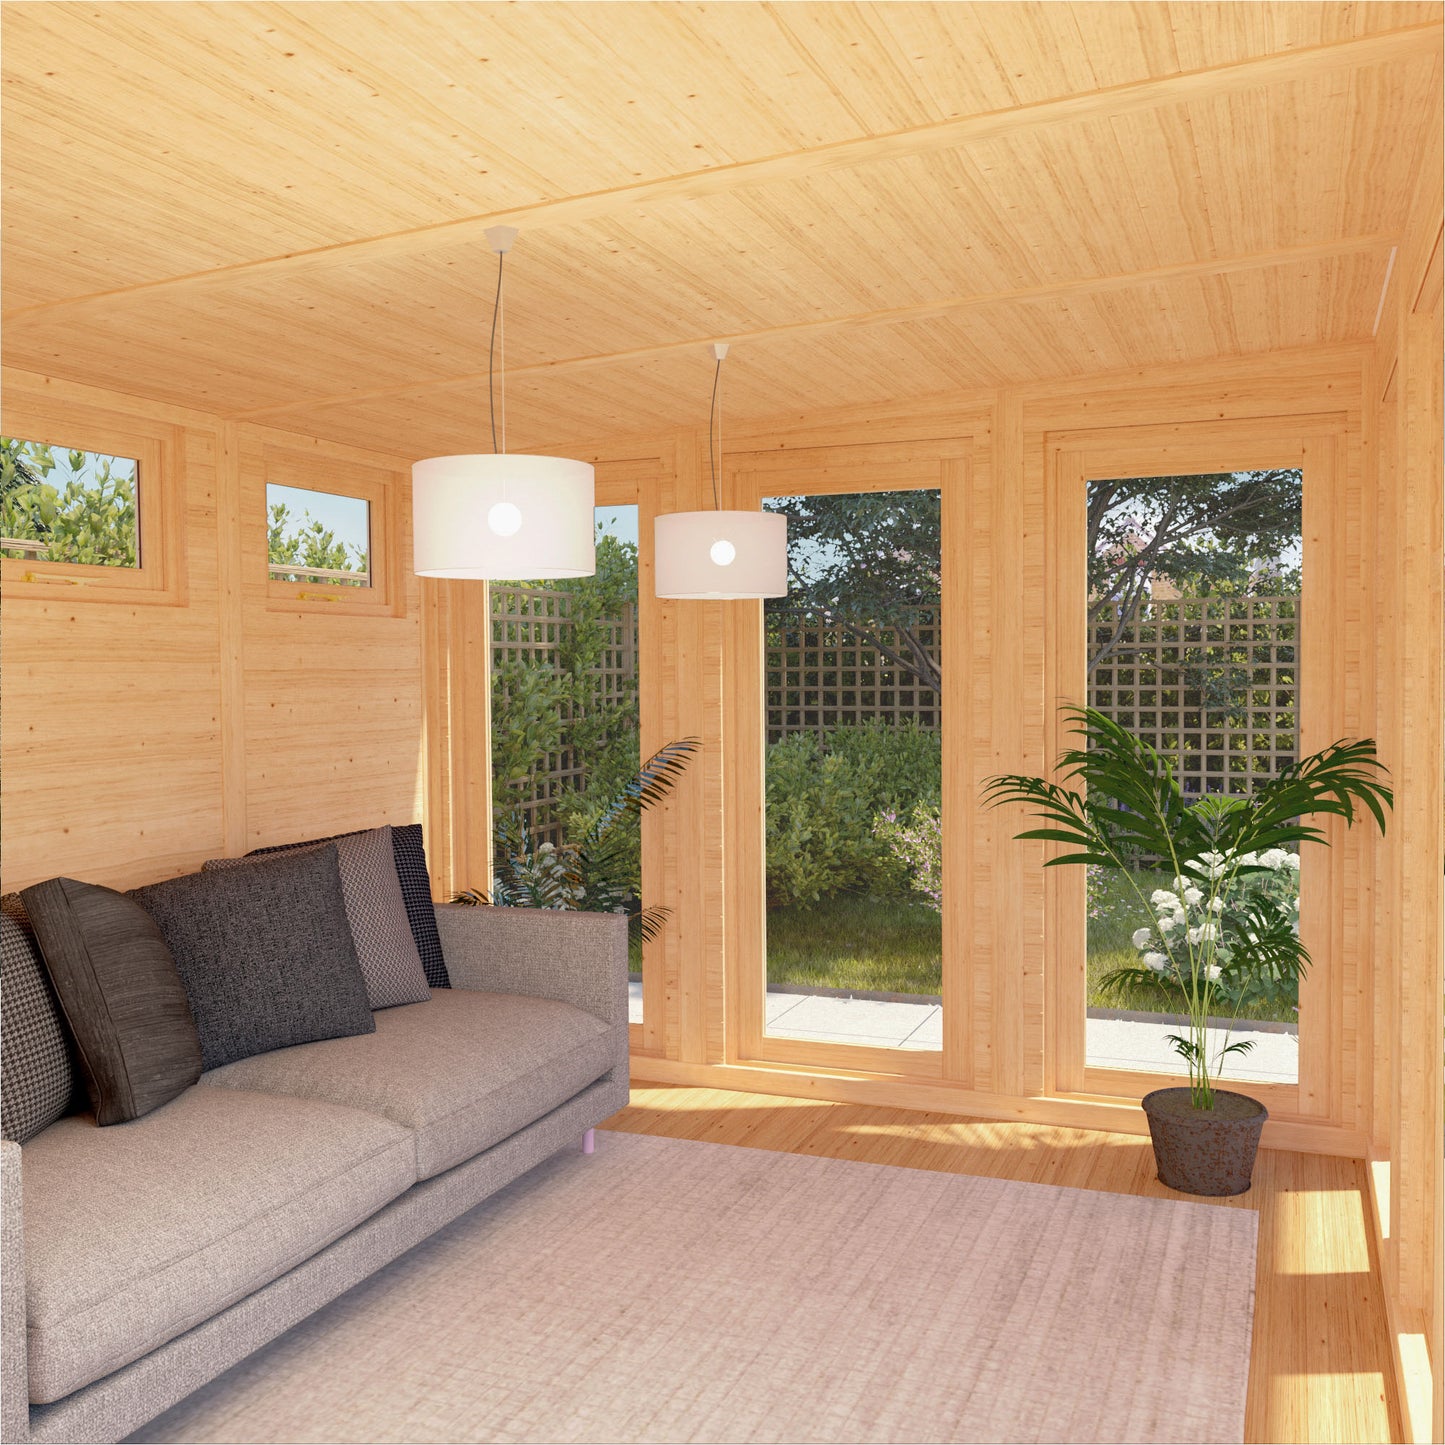 The Harlow 5m x 4m Premium Insulated Garden Room